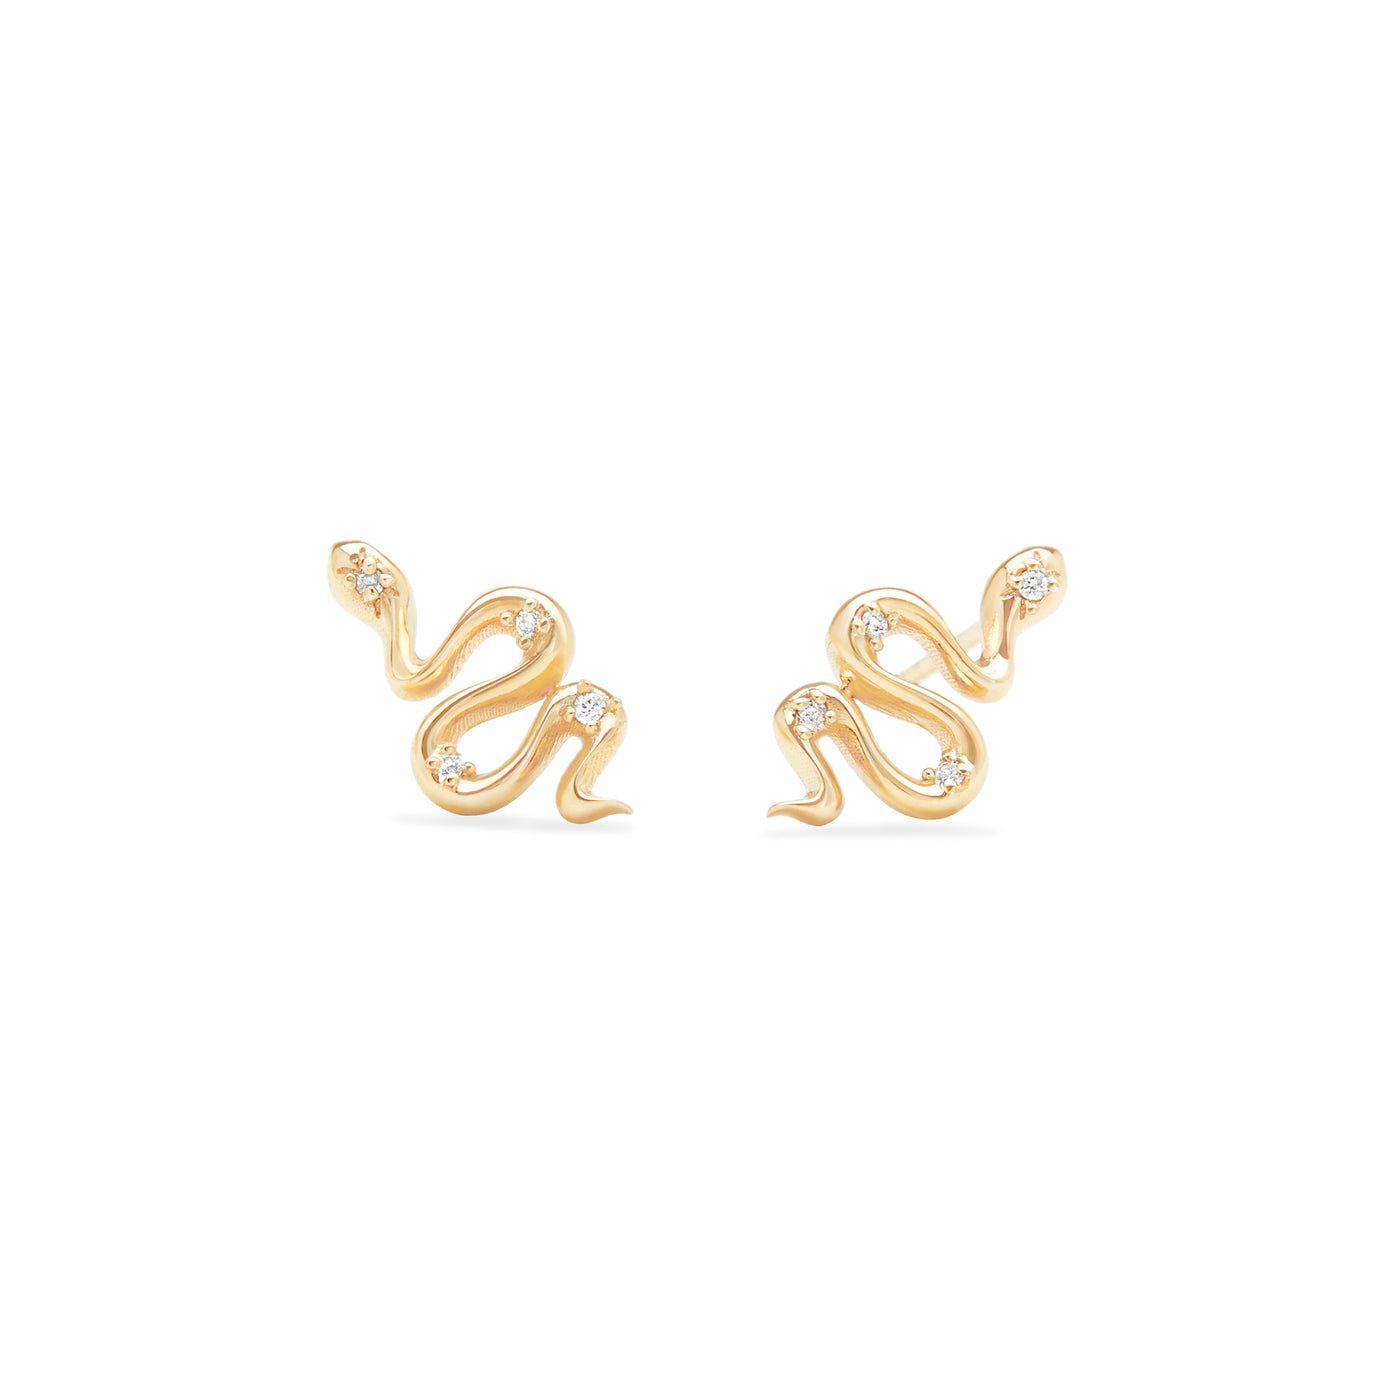 14k Karat yellow gold snake stud earrings with diamonds on white background